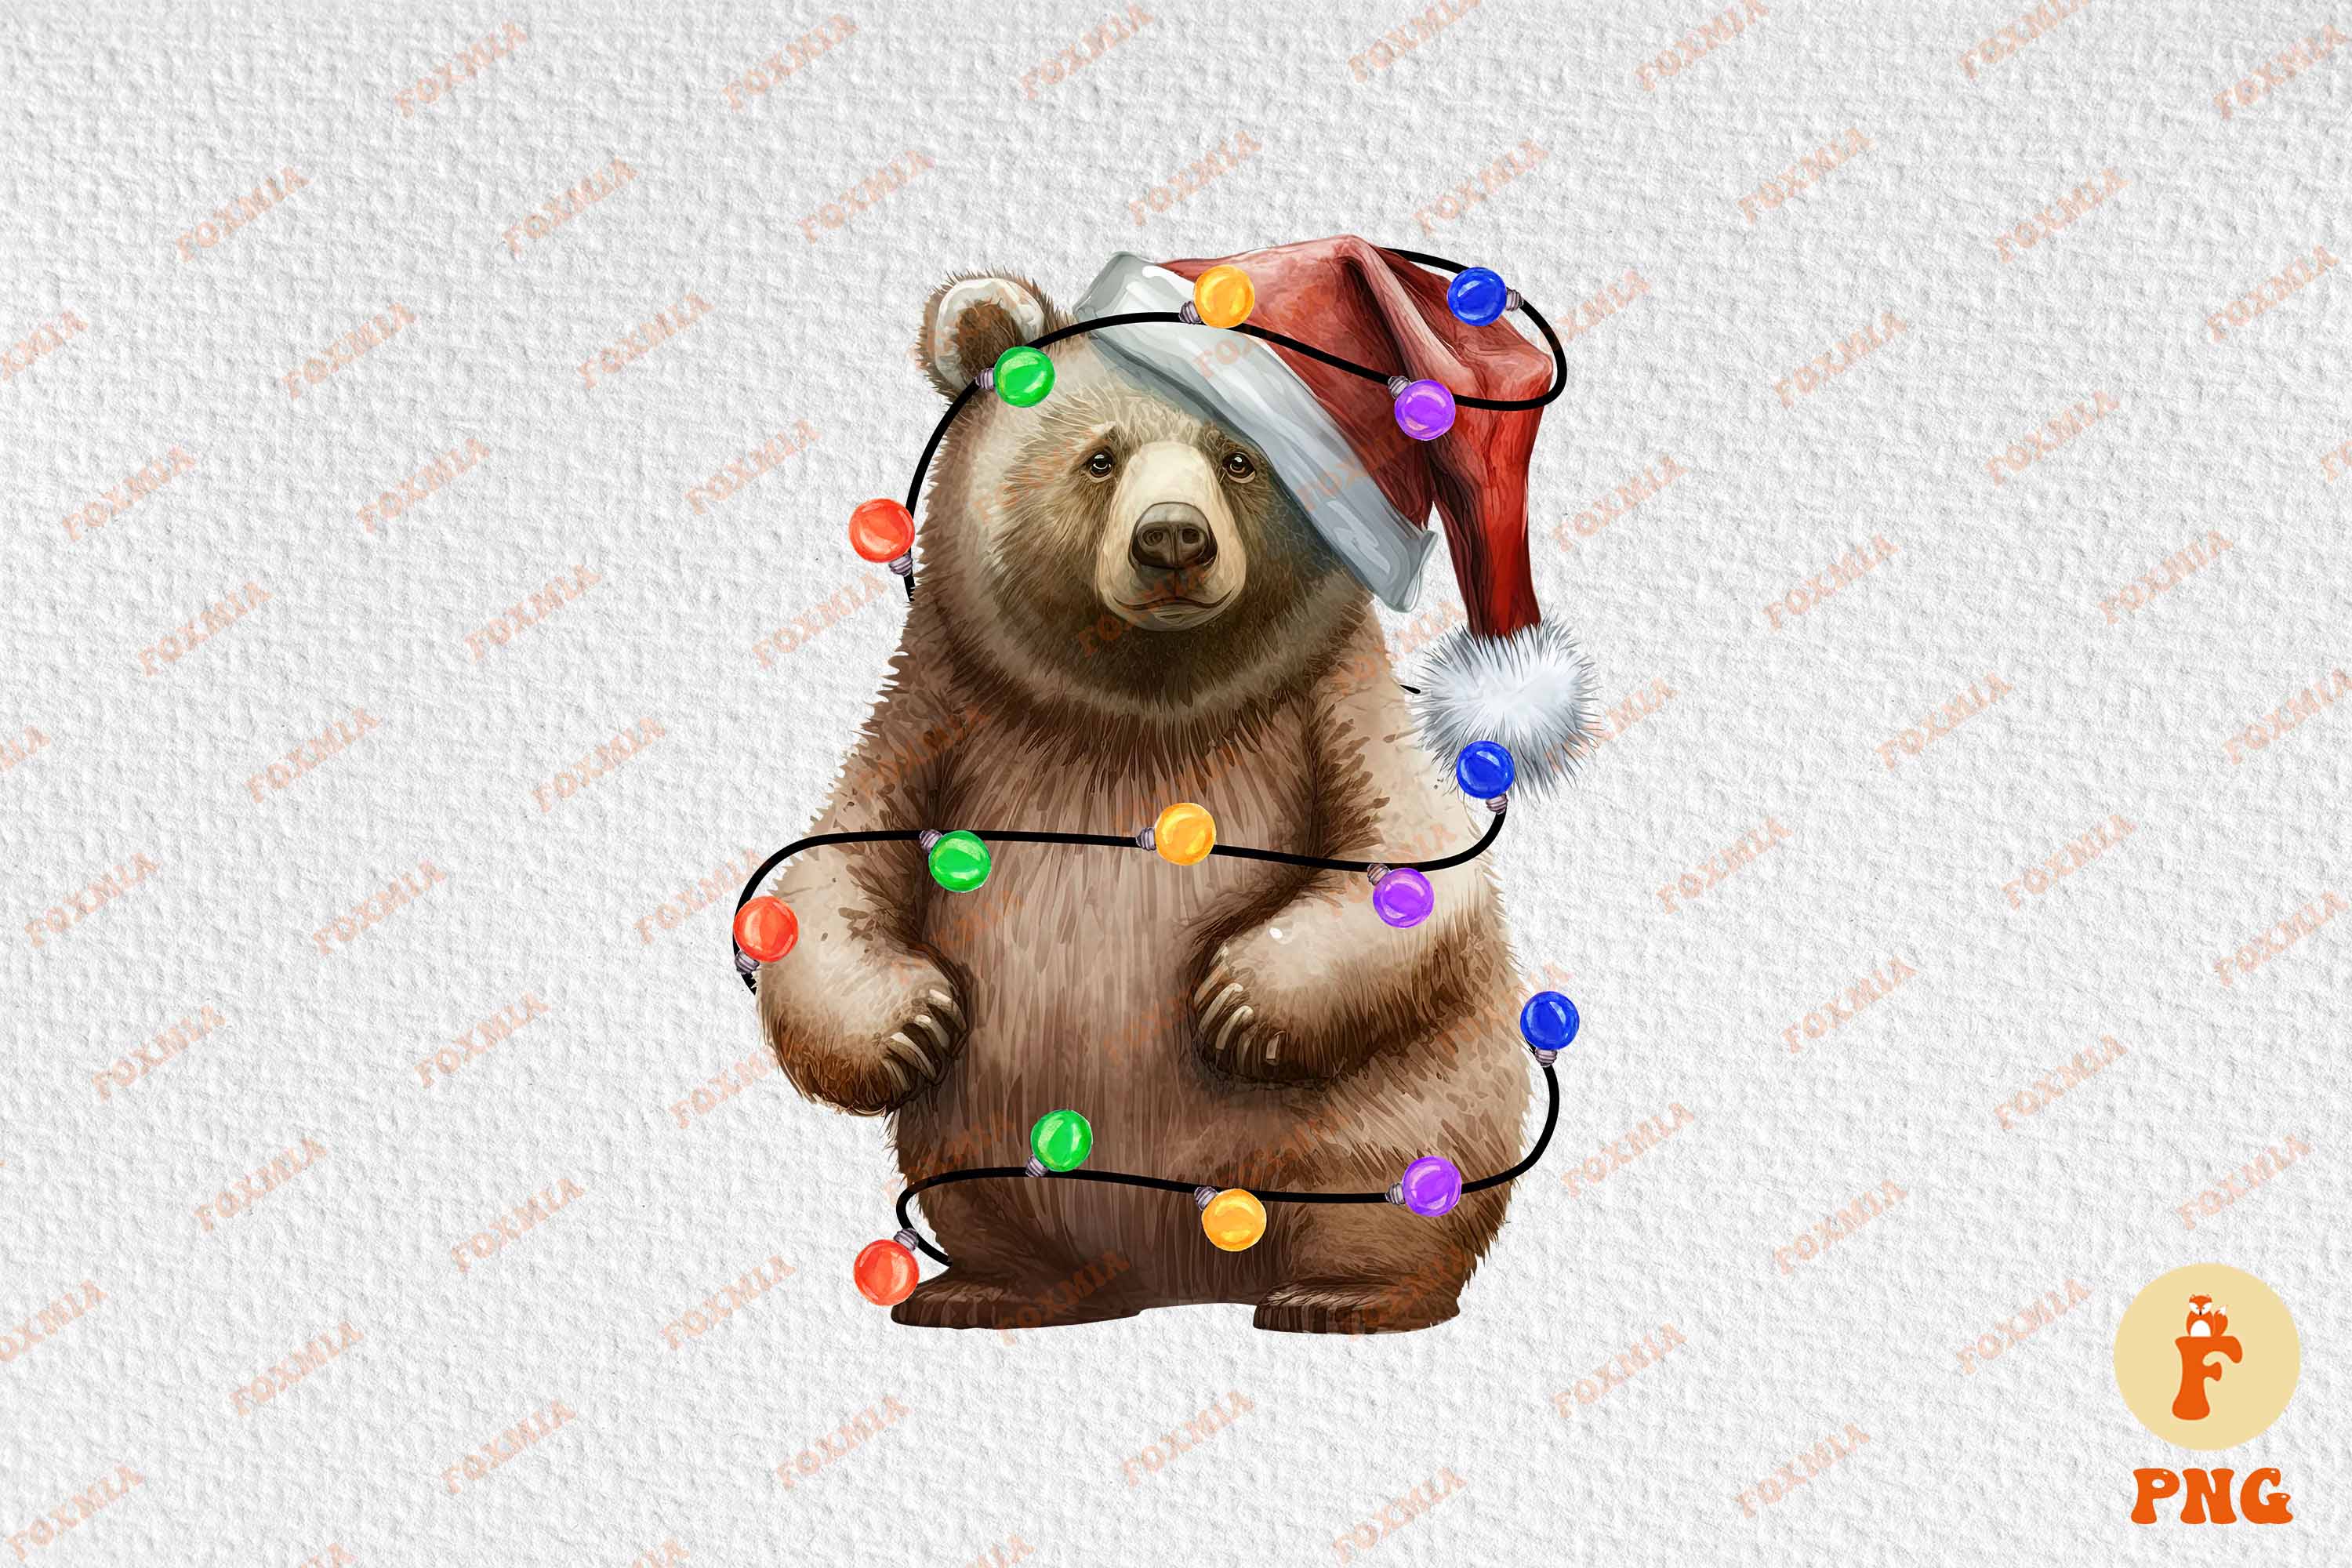 A wonderful image of a bear in a santa hat.